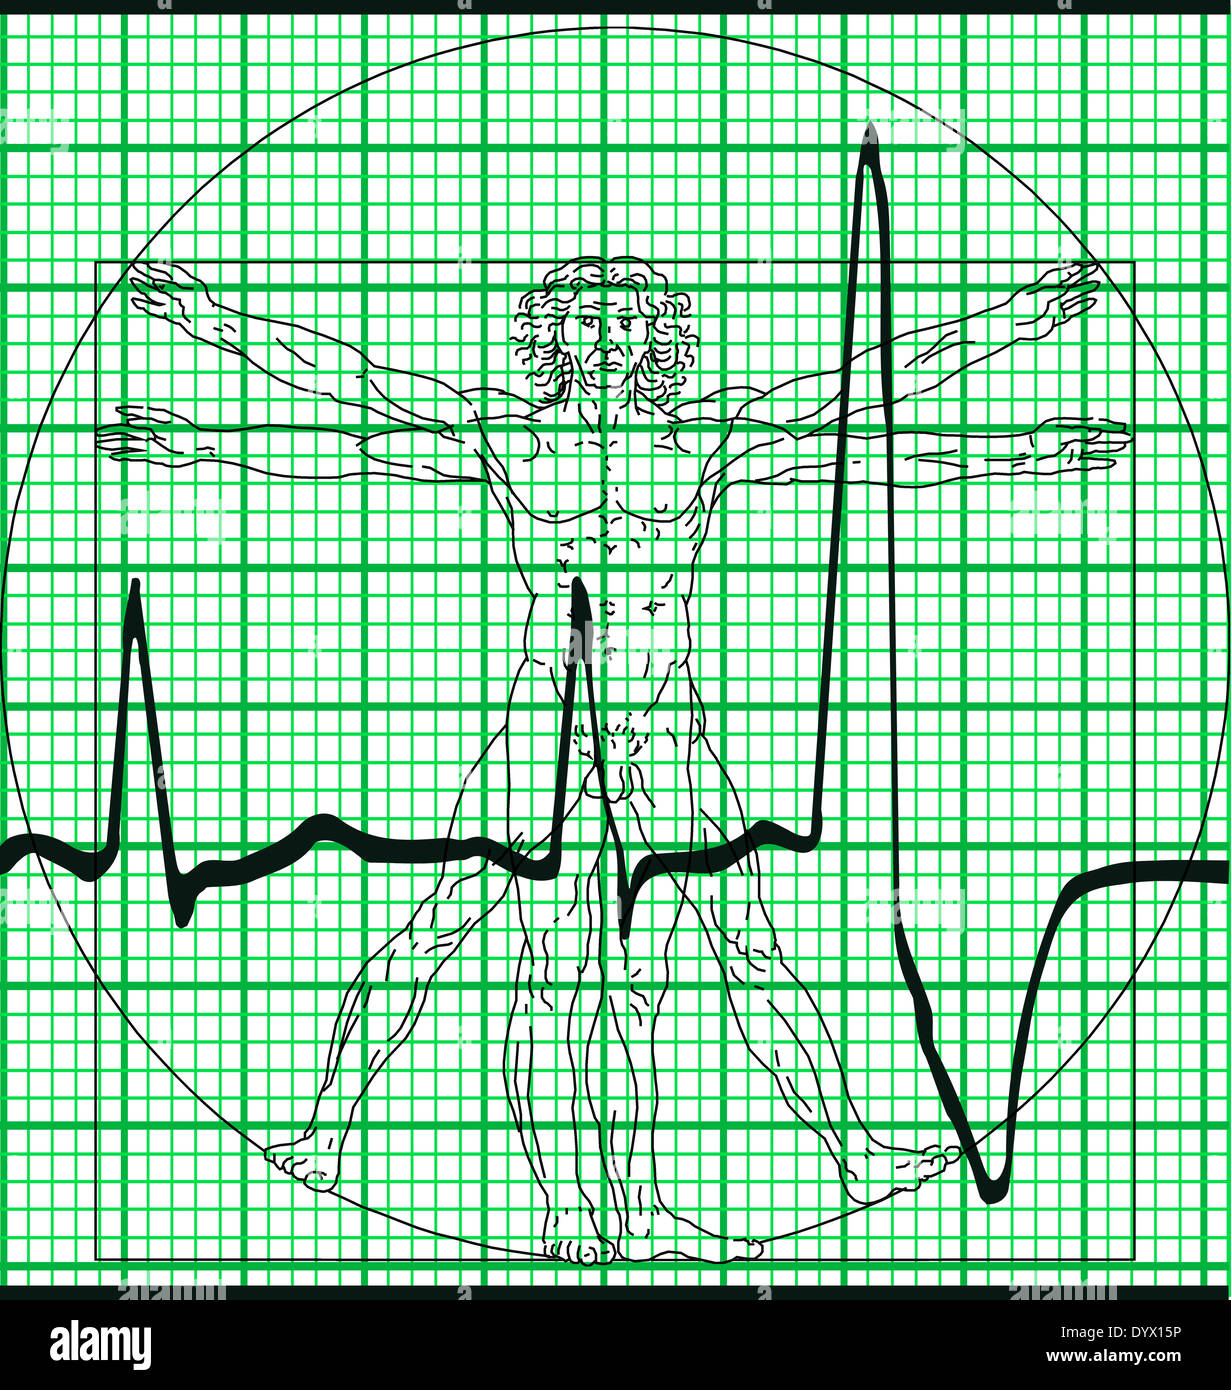 Leonardo da Vinci's Vitruvian Man sketch and EKG electrocardiogram print Stock Photo